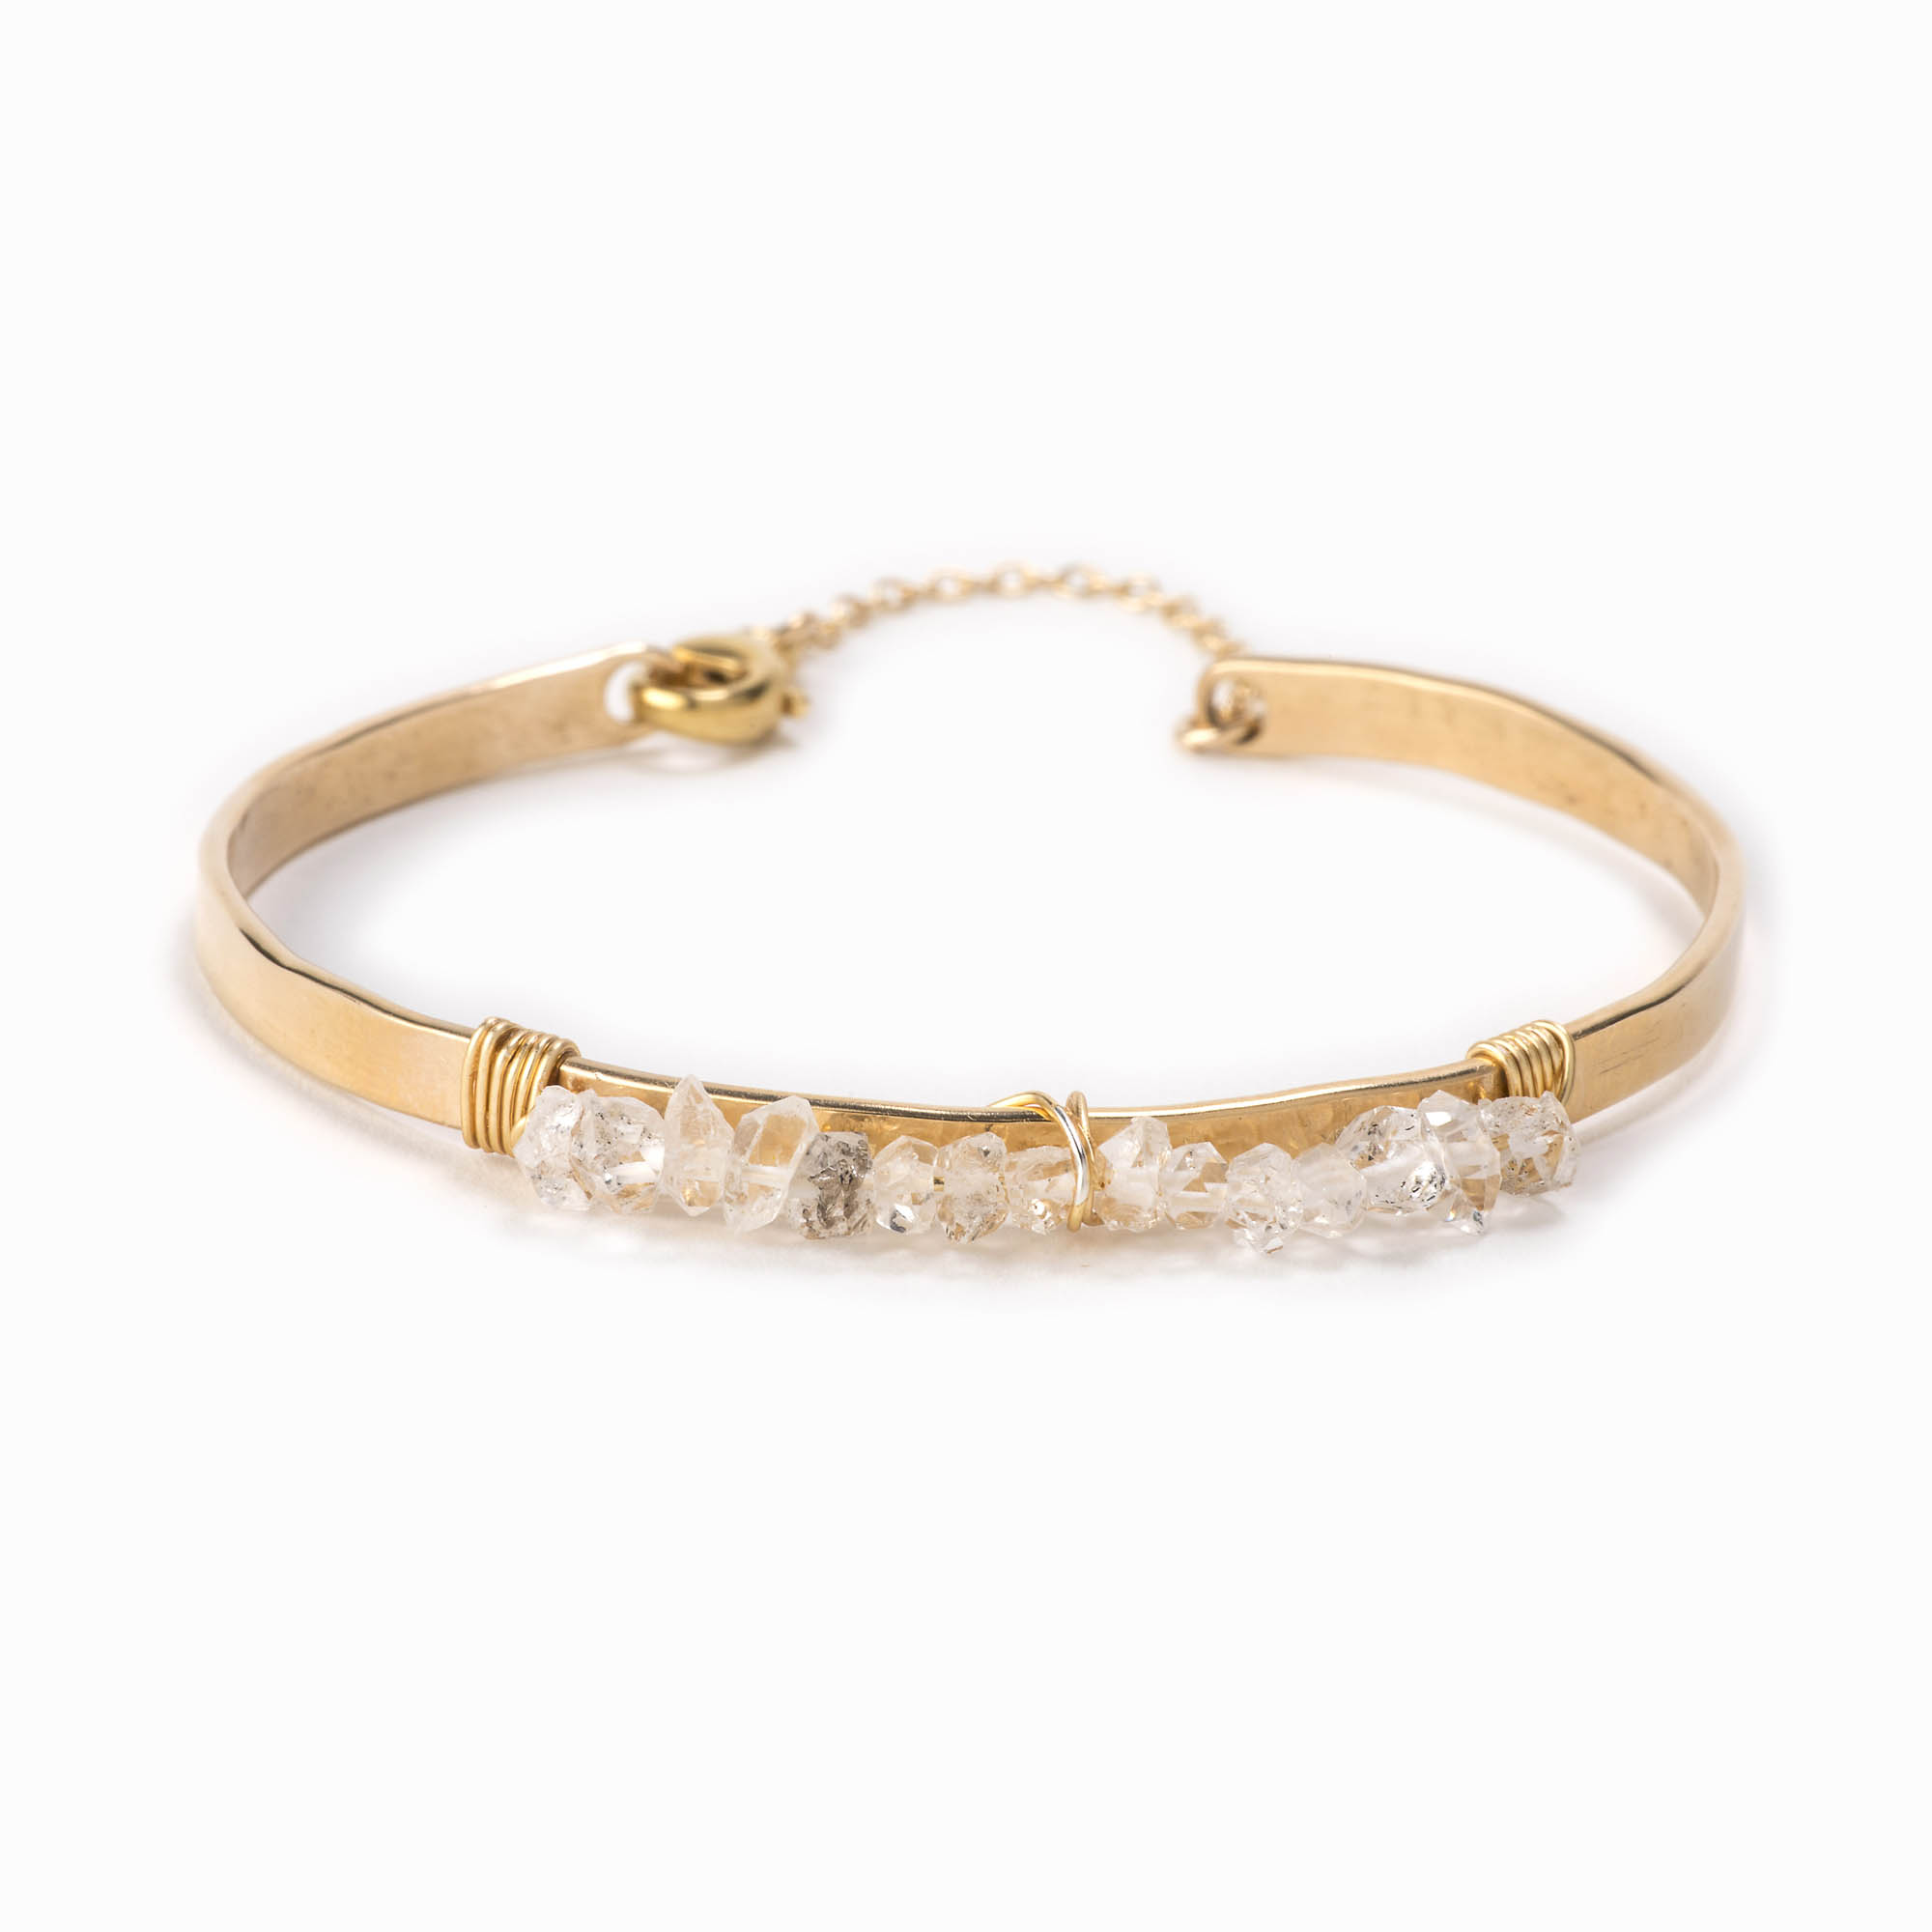 Featured image for “Ravi Gold Bracelet”